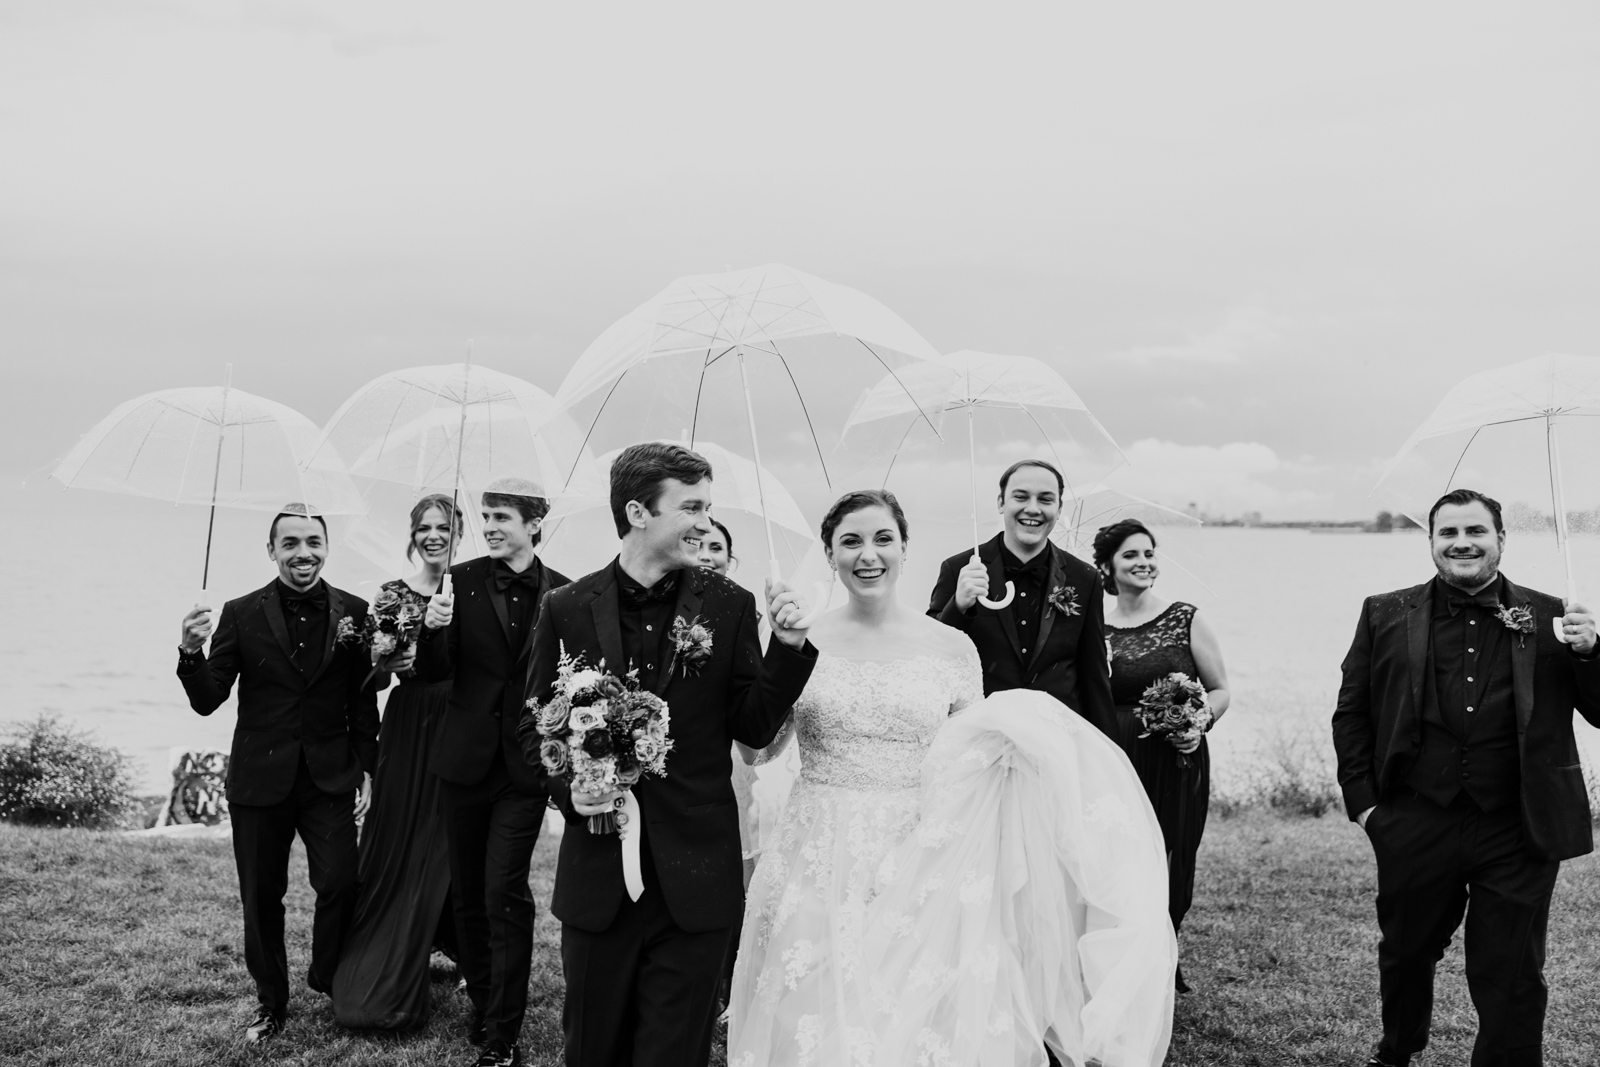 Wedding party walks along lakefront with umbrellas on rainy day by documentary wedding photographer Emma Mullins Photography